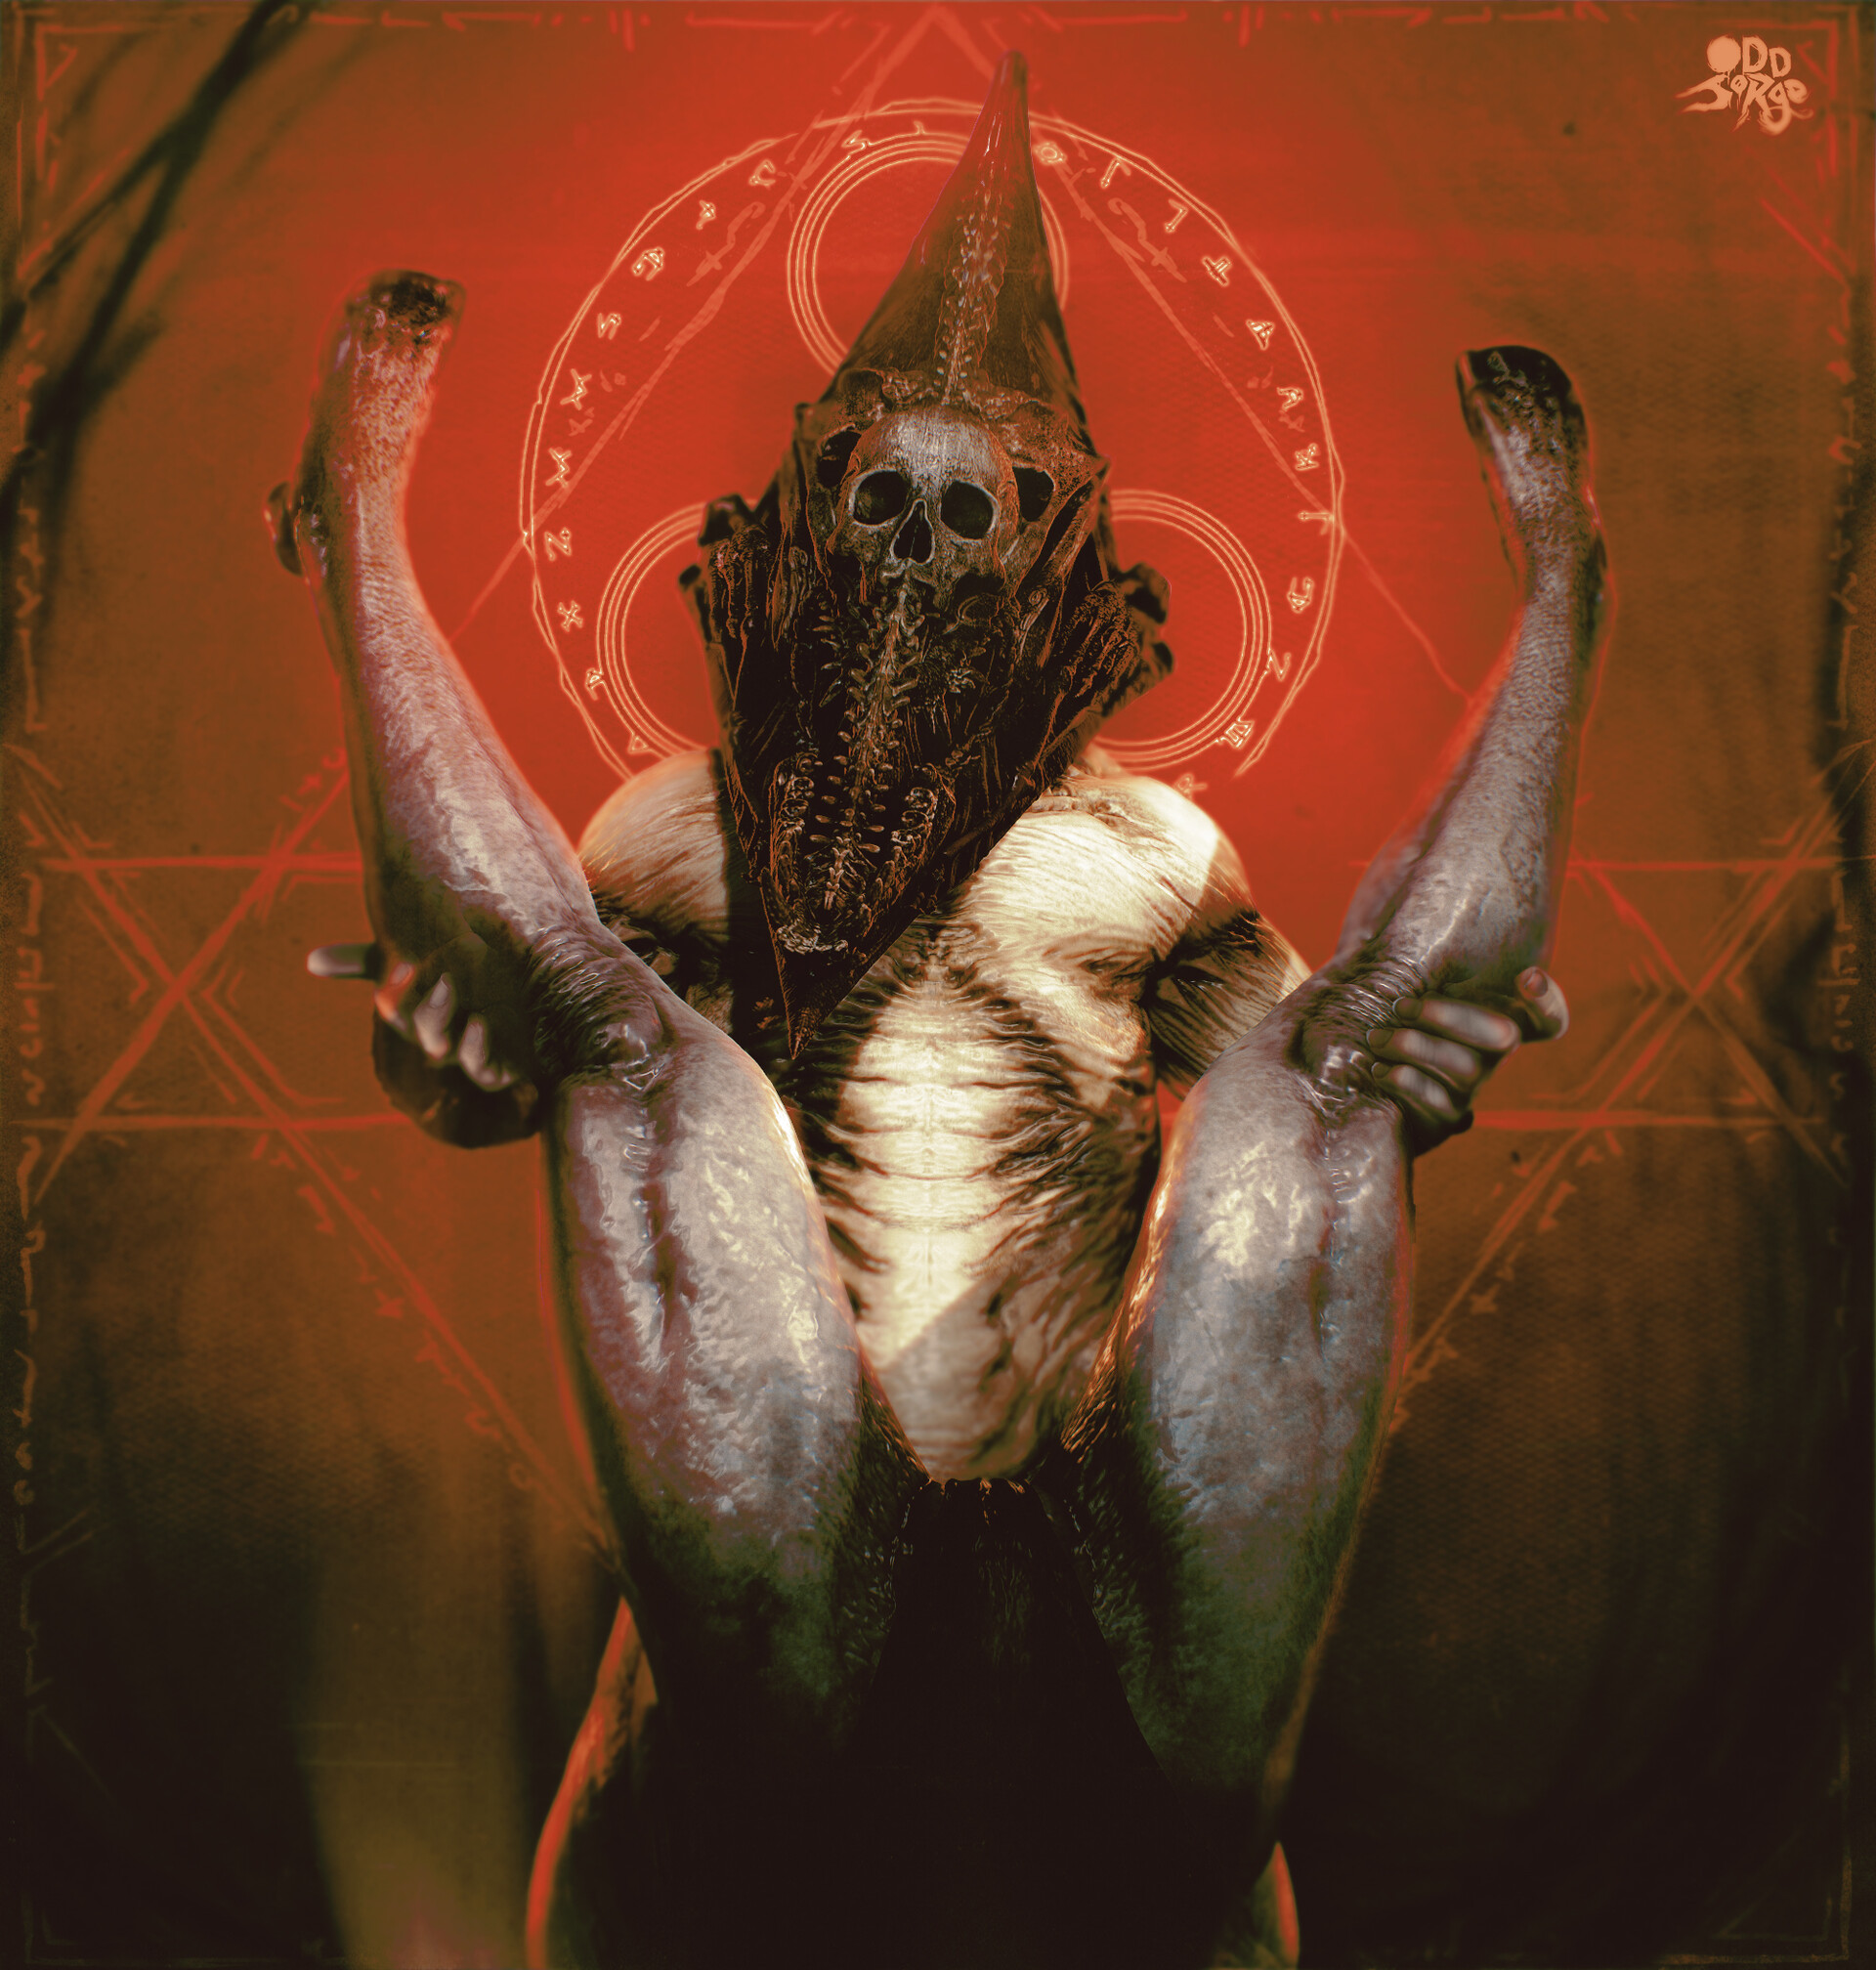 Odd Jorge - Silent Hill 2 Redesign Part II - Pyramid Head